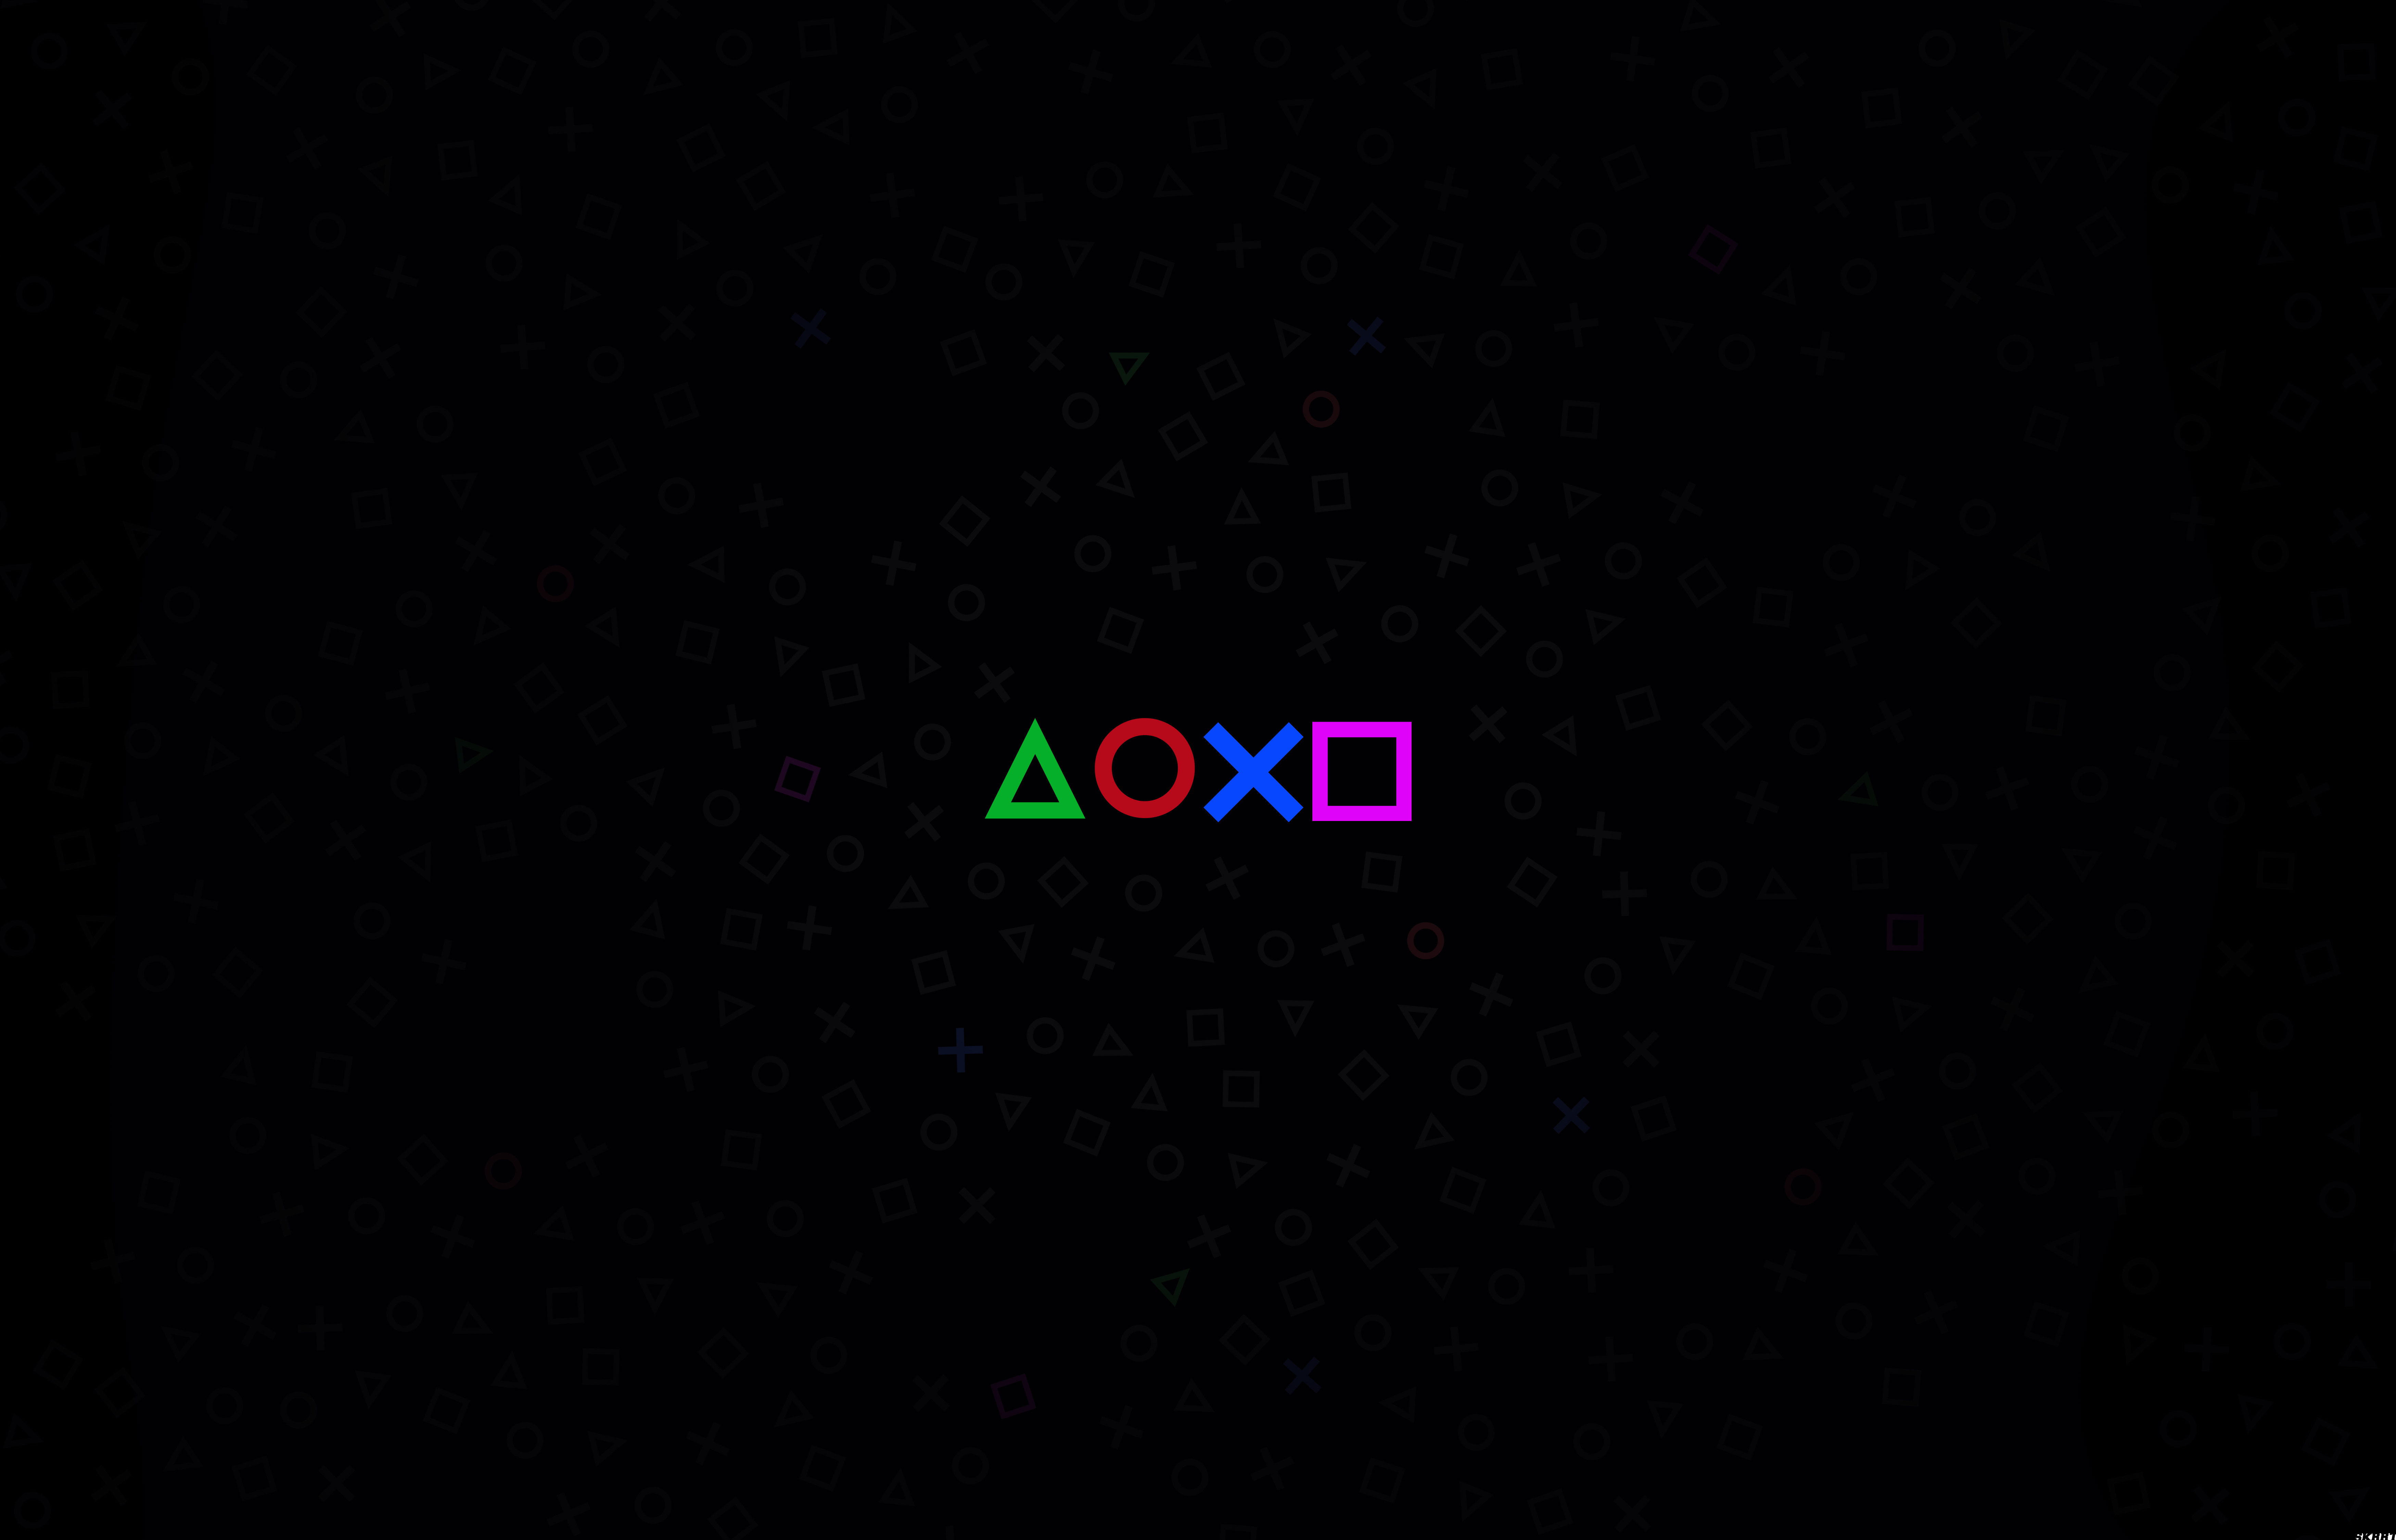 General 7000x4500 PlayStation logo Sony simple background digital art black background minimalism dark background